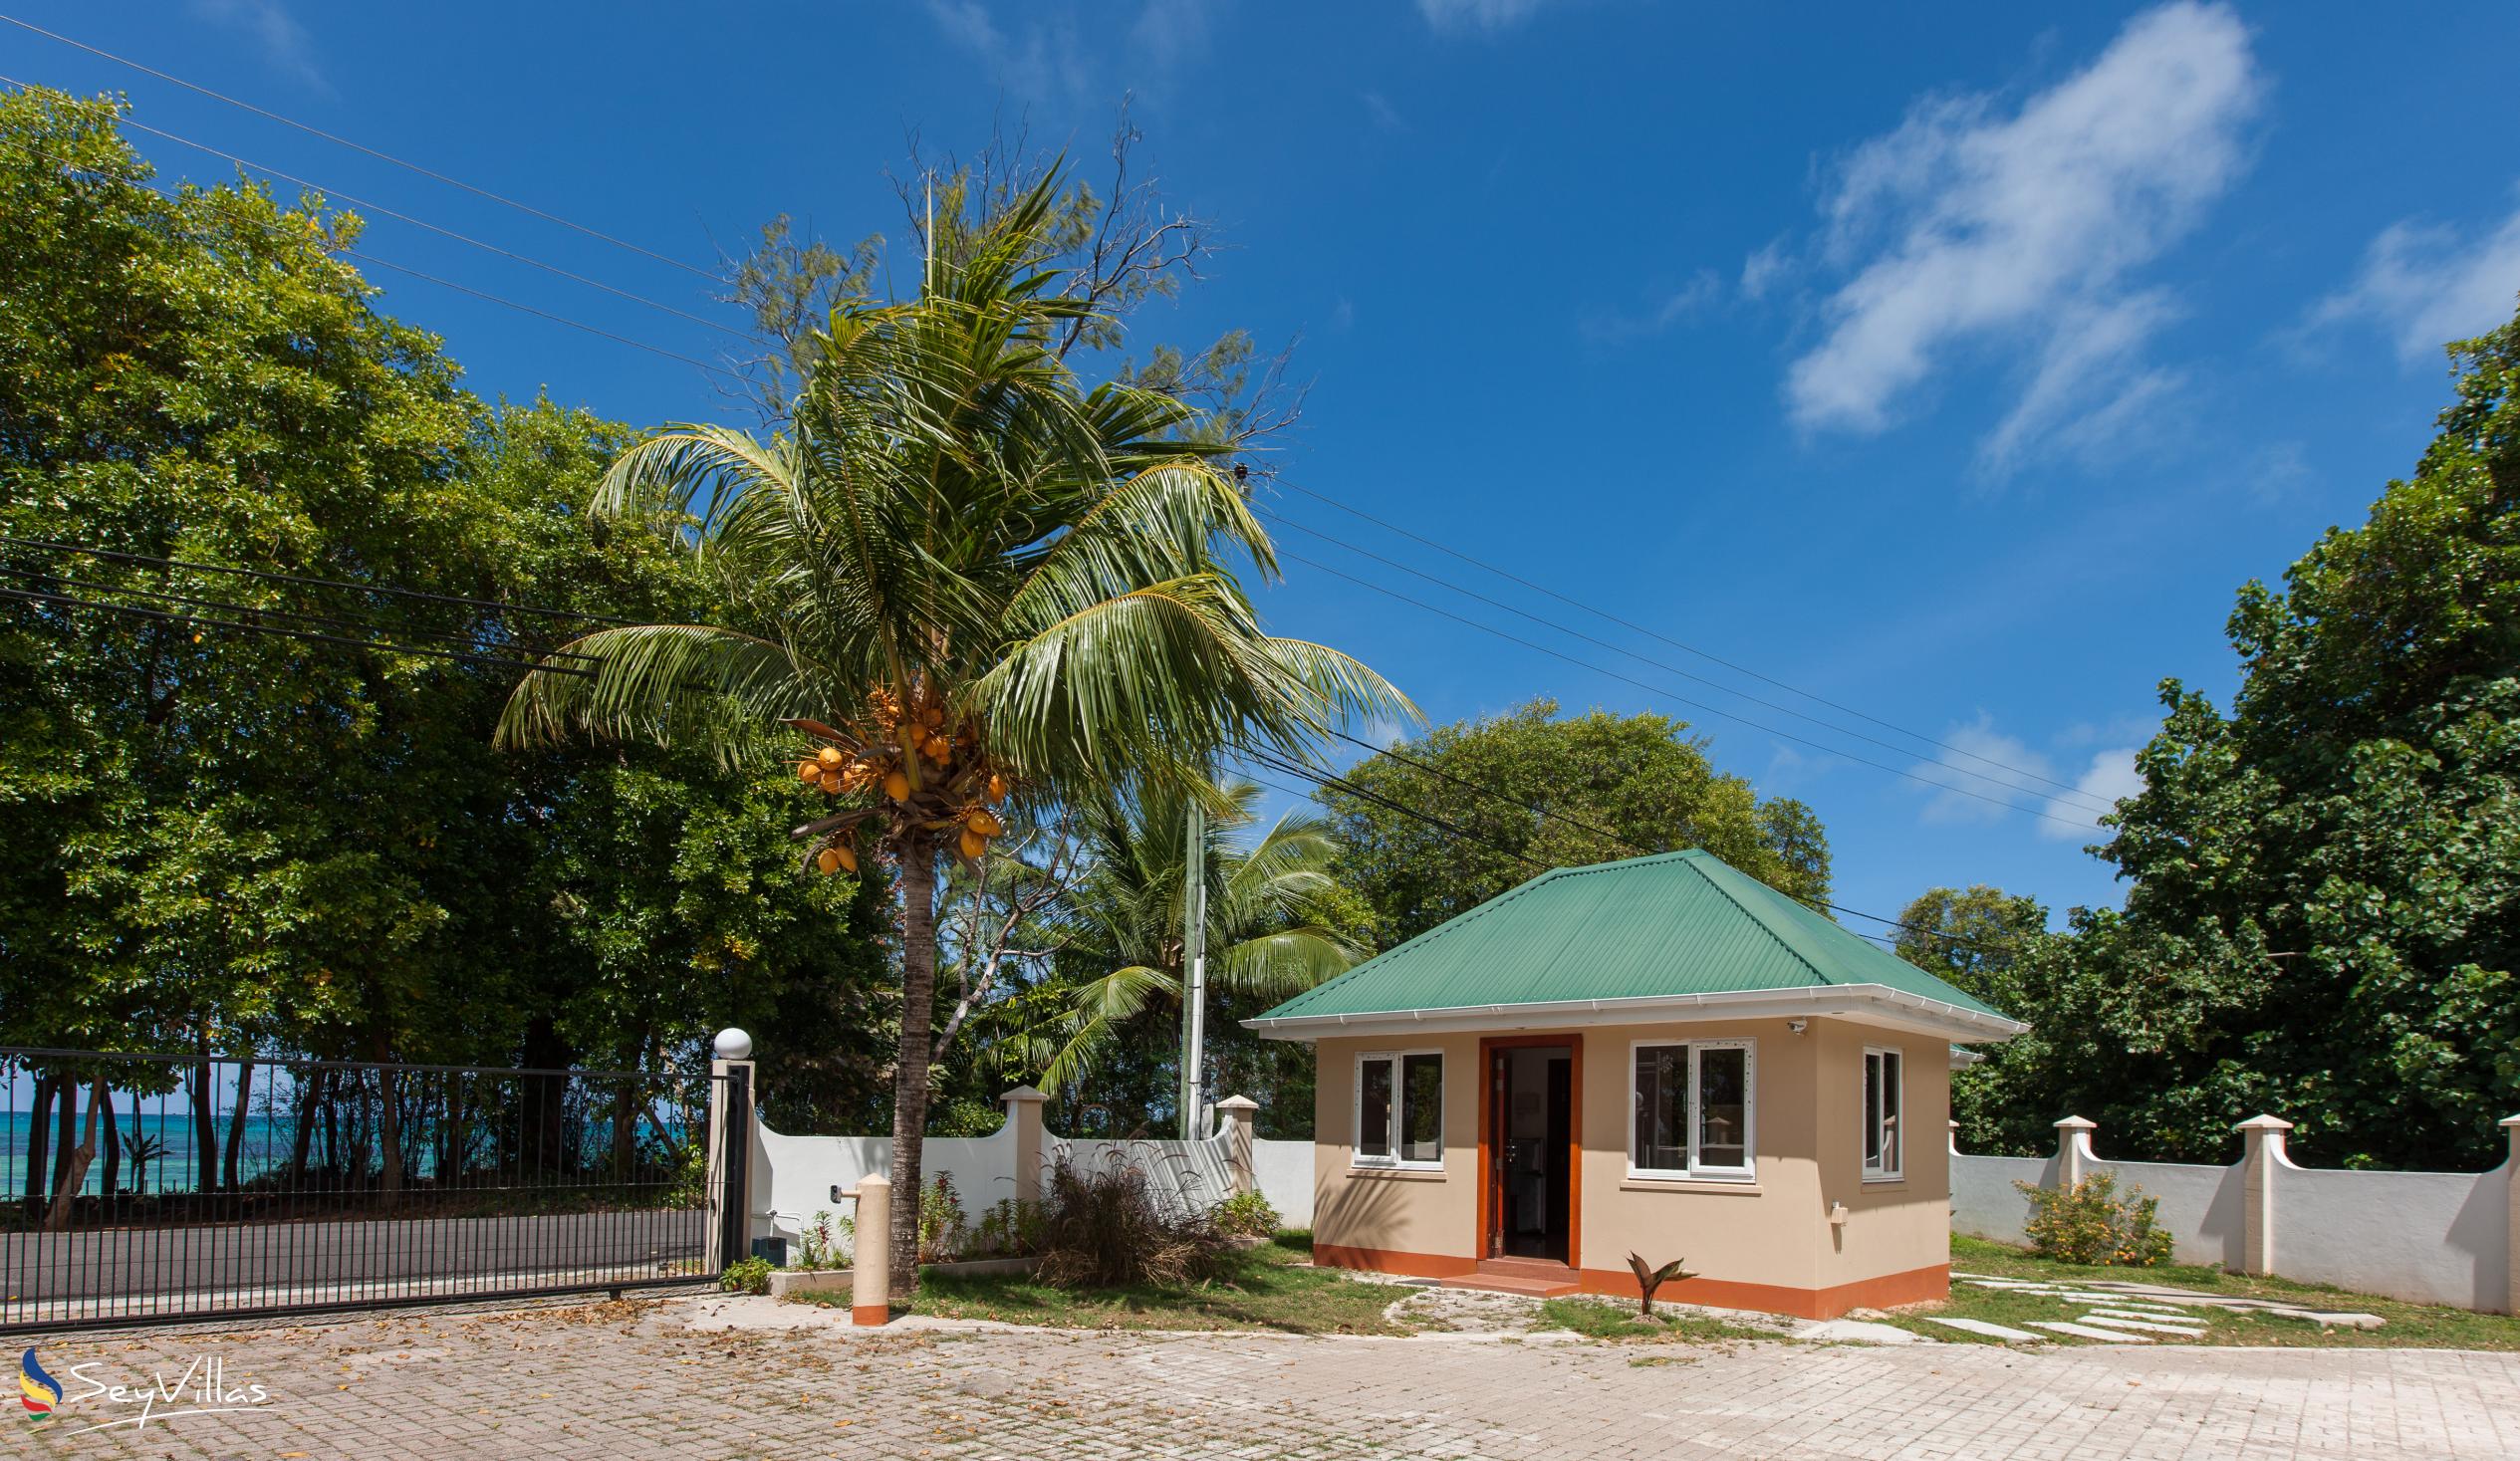 Photo 65: YASAD Luxury Beach Residence - 1-Bedroom En-Suite - Praslin (Seychelles)